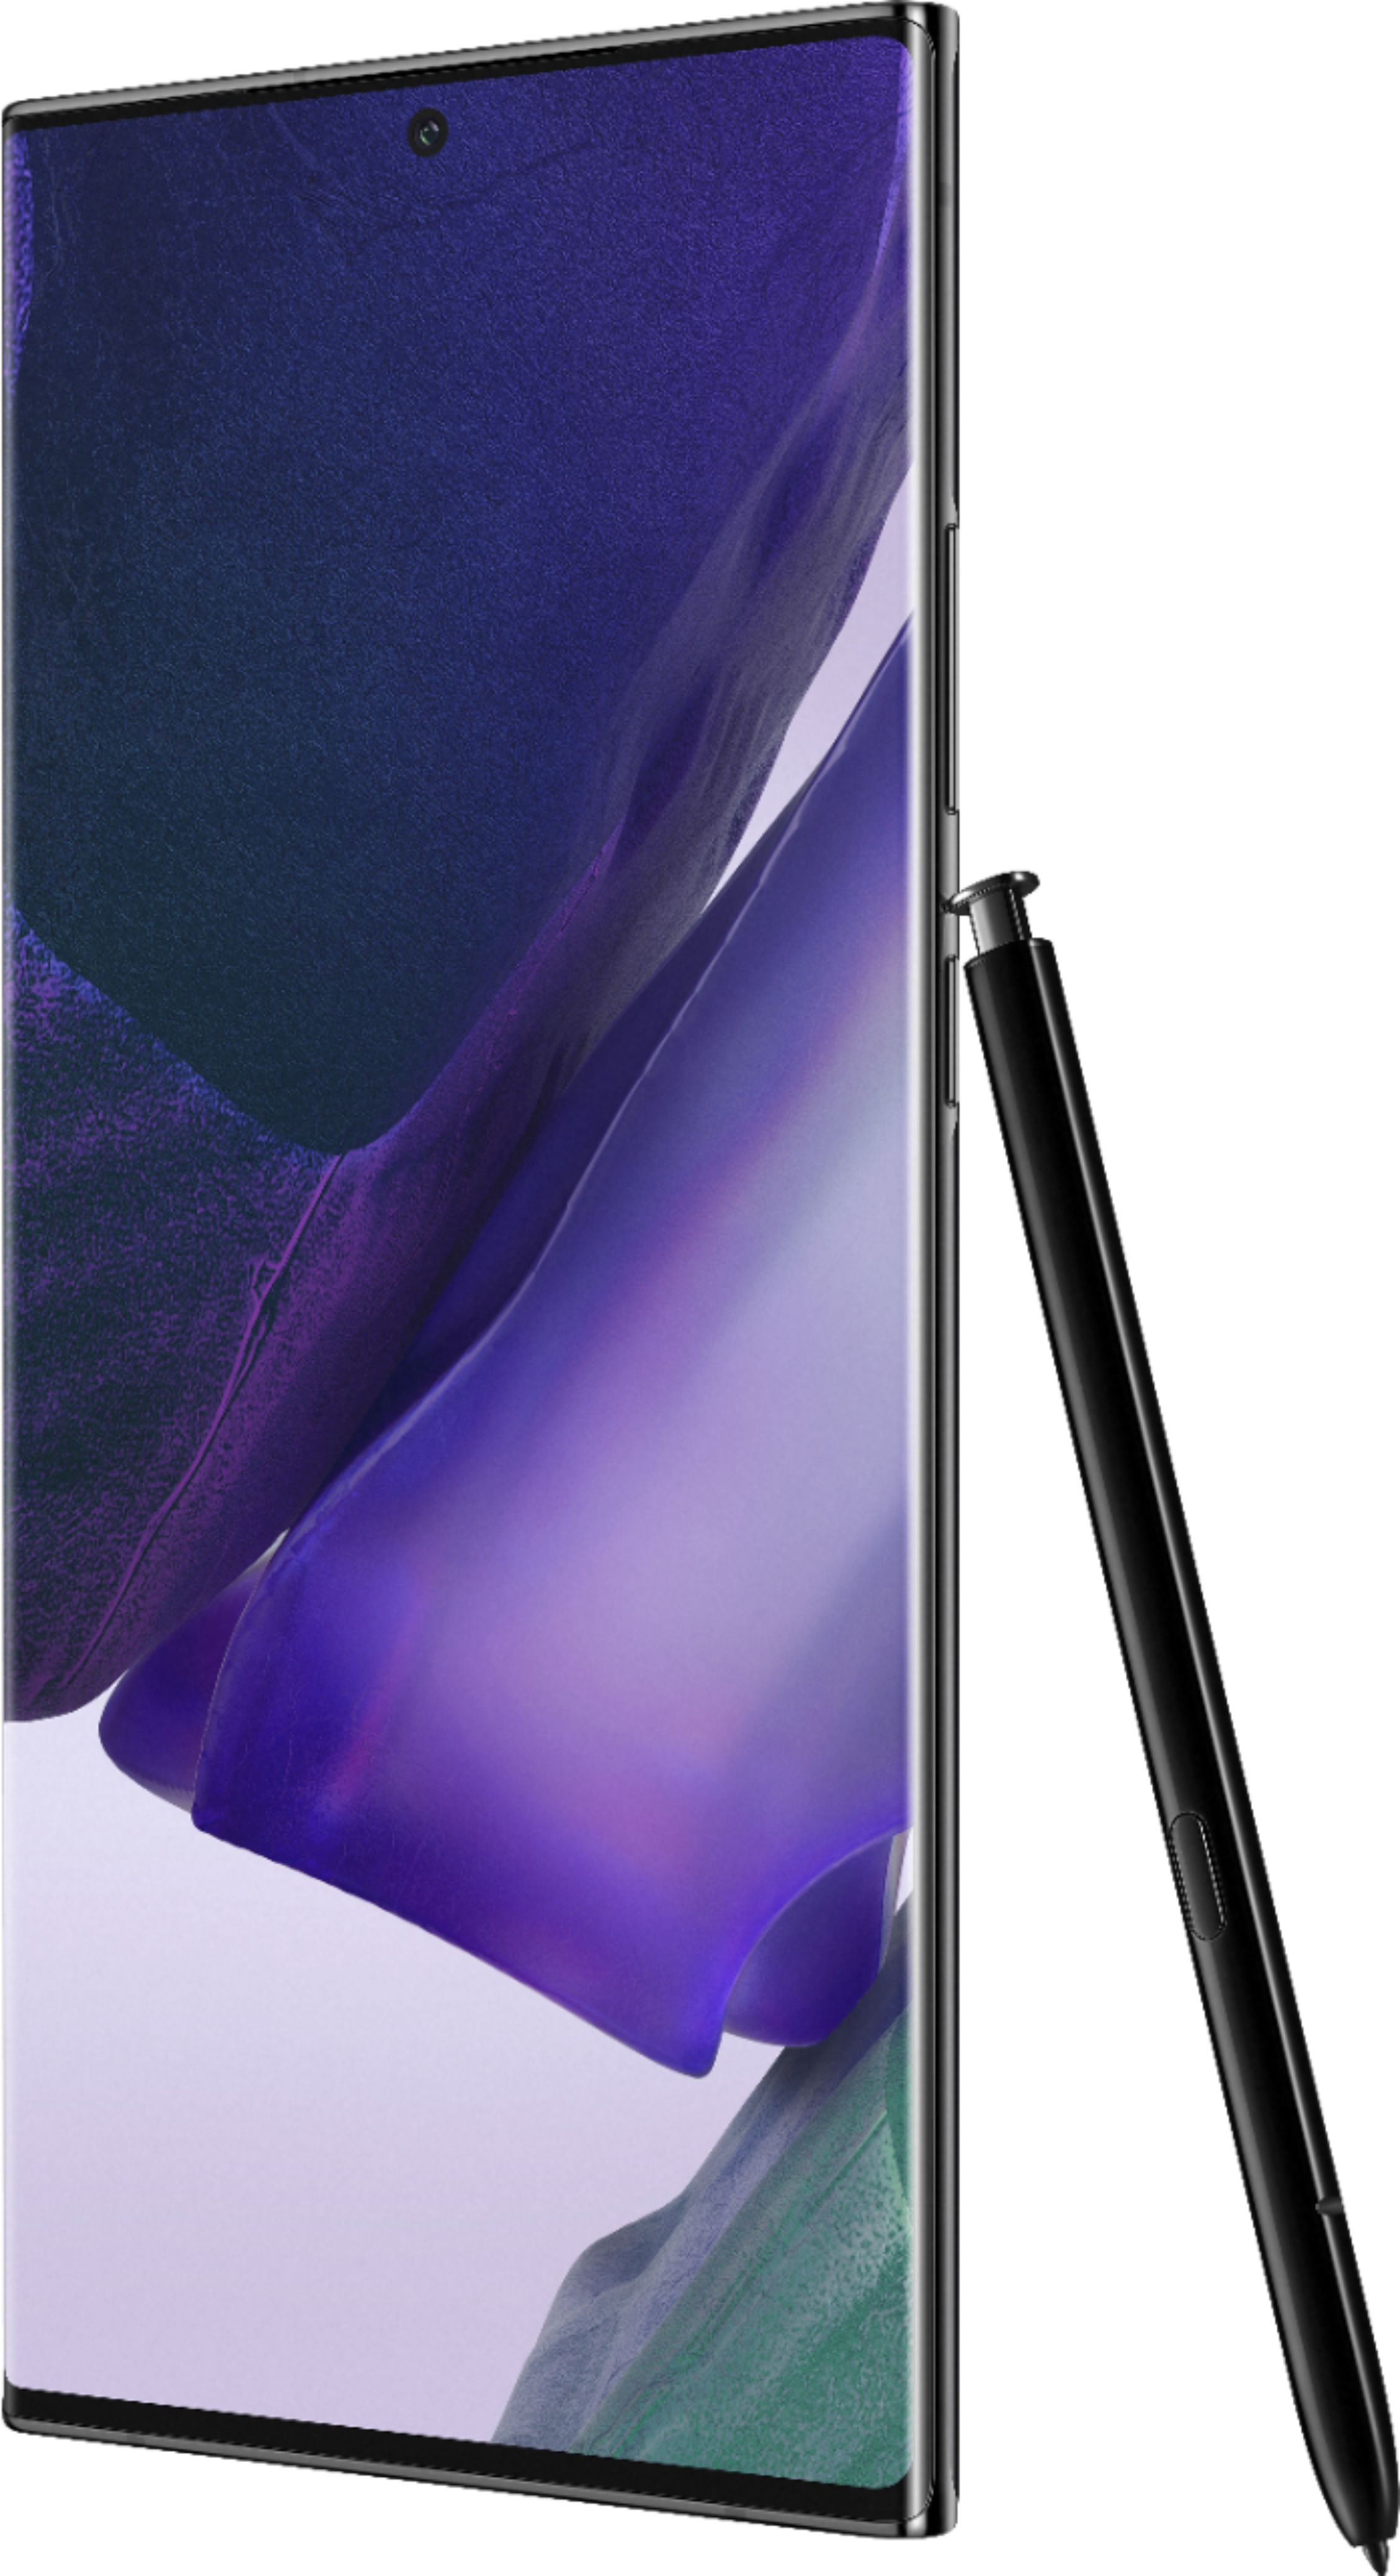 Samsung Galaxy Note20 Ultra 5g 128gb Mystic Black Verizon Sm N986uzkavzw Best Buy